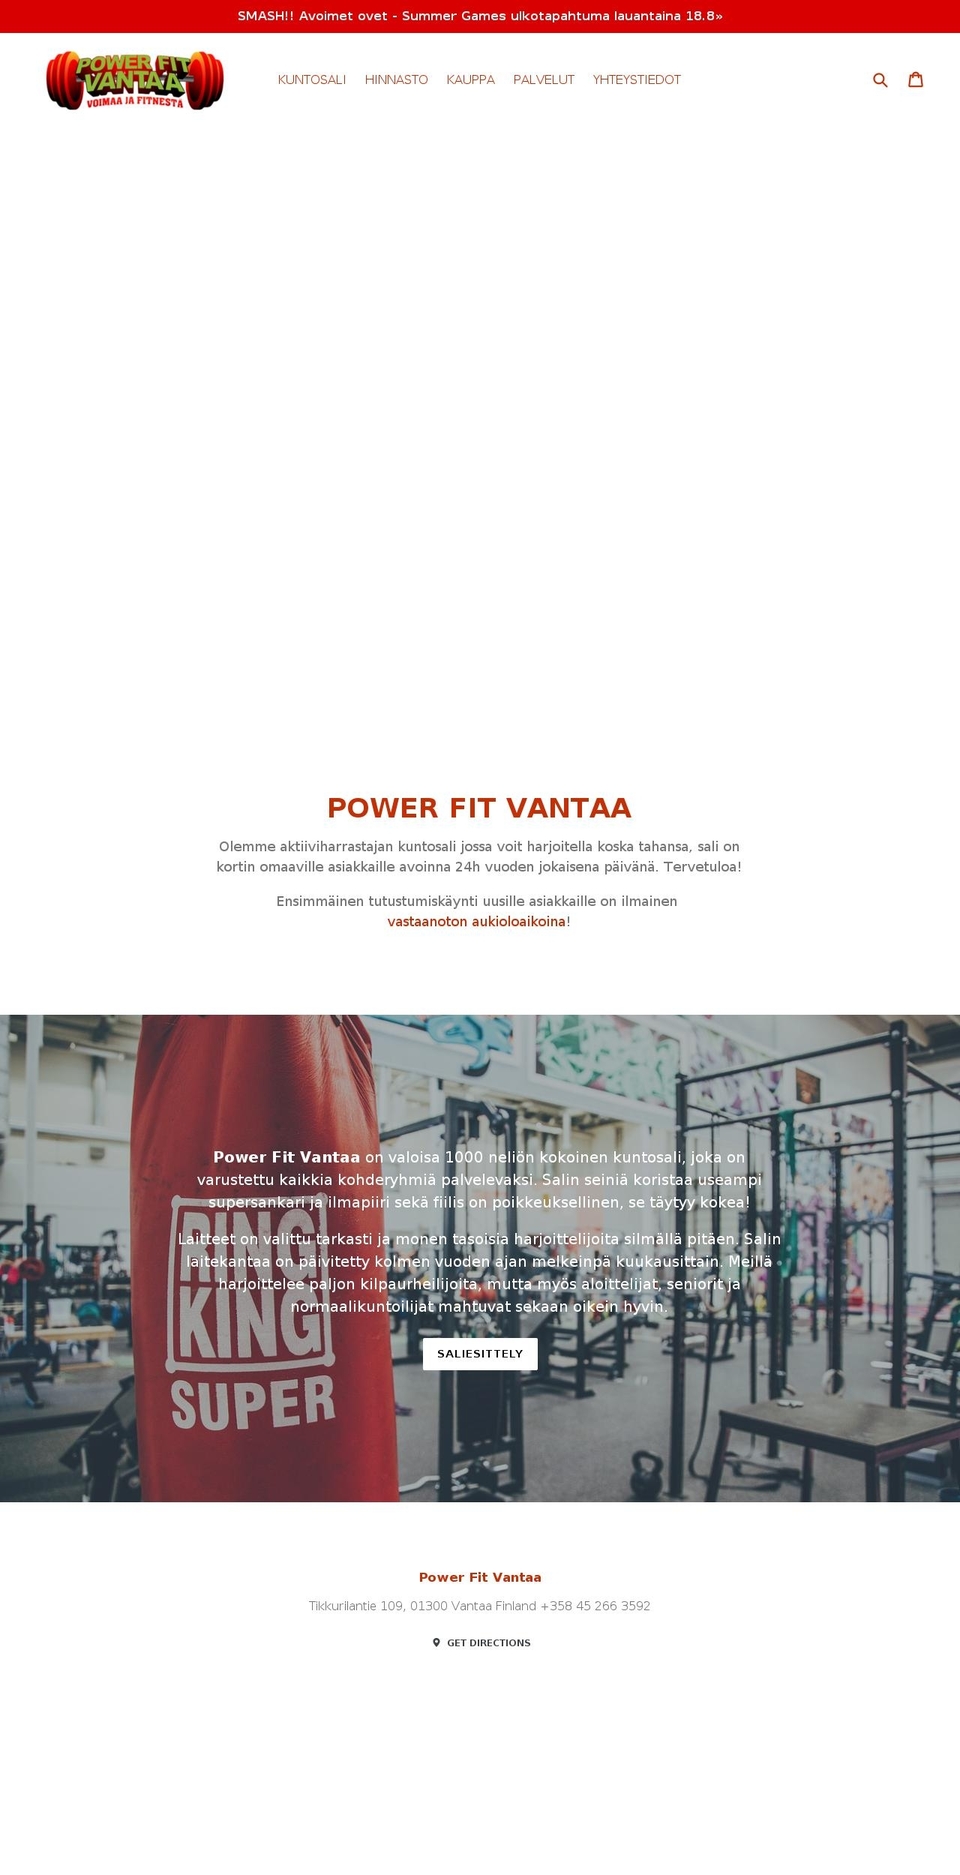 powerfitvantaa.fi shopify website screenshot